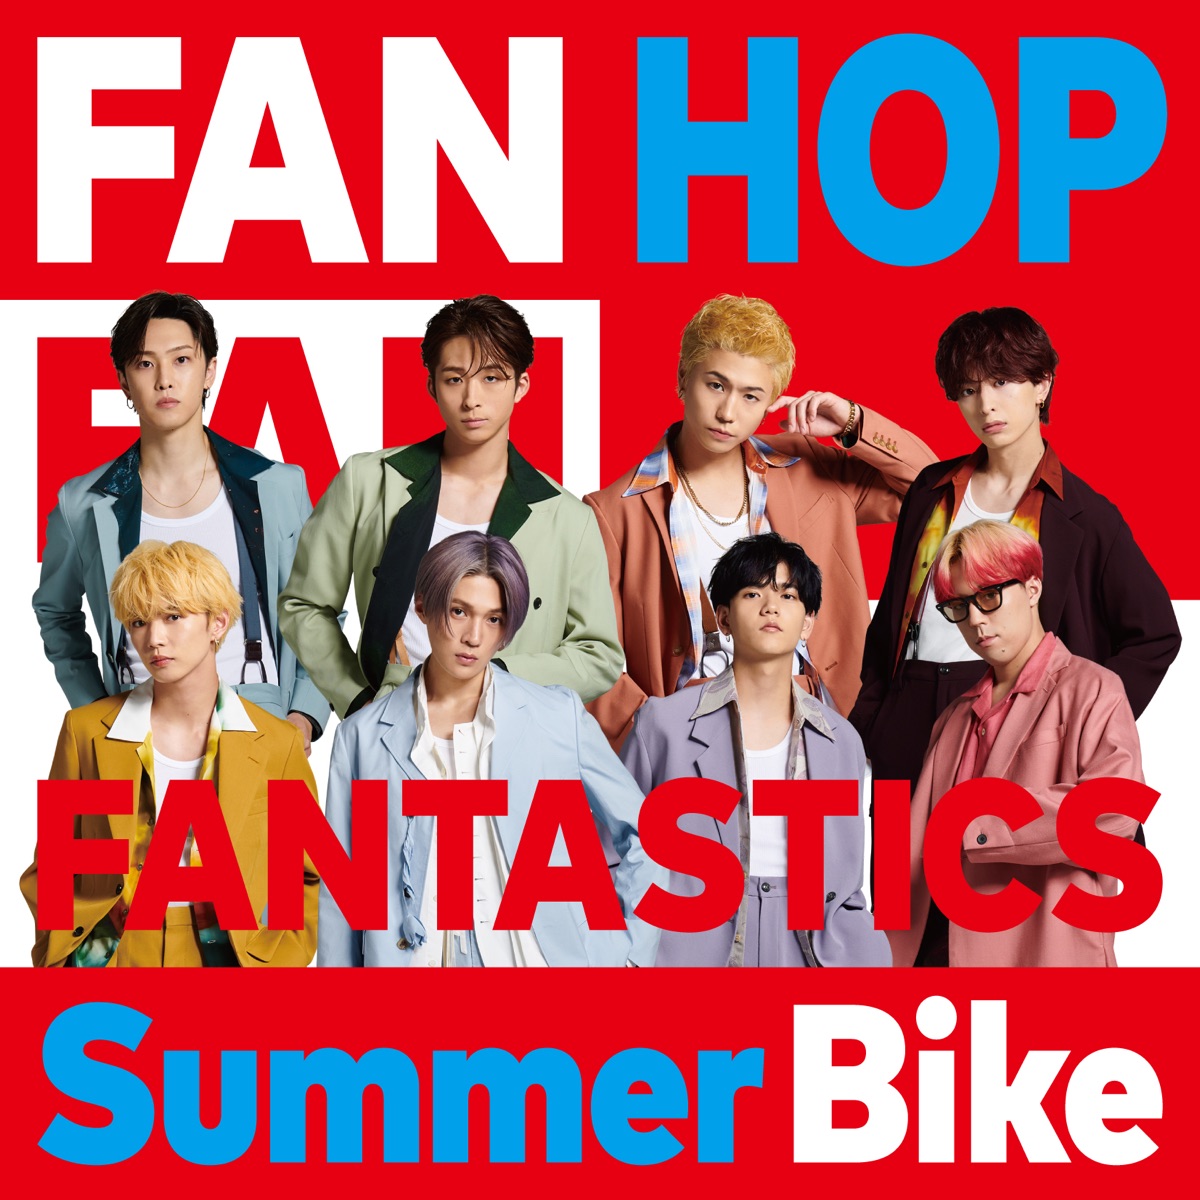 『FANTASTICS from EXILE TRIBE - Summer Bike 歌詞』収録の『Summer Bike』ジャケット